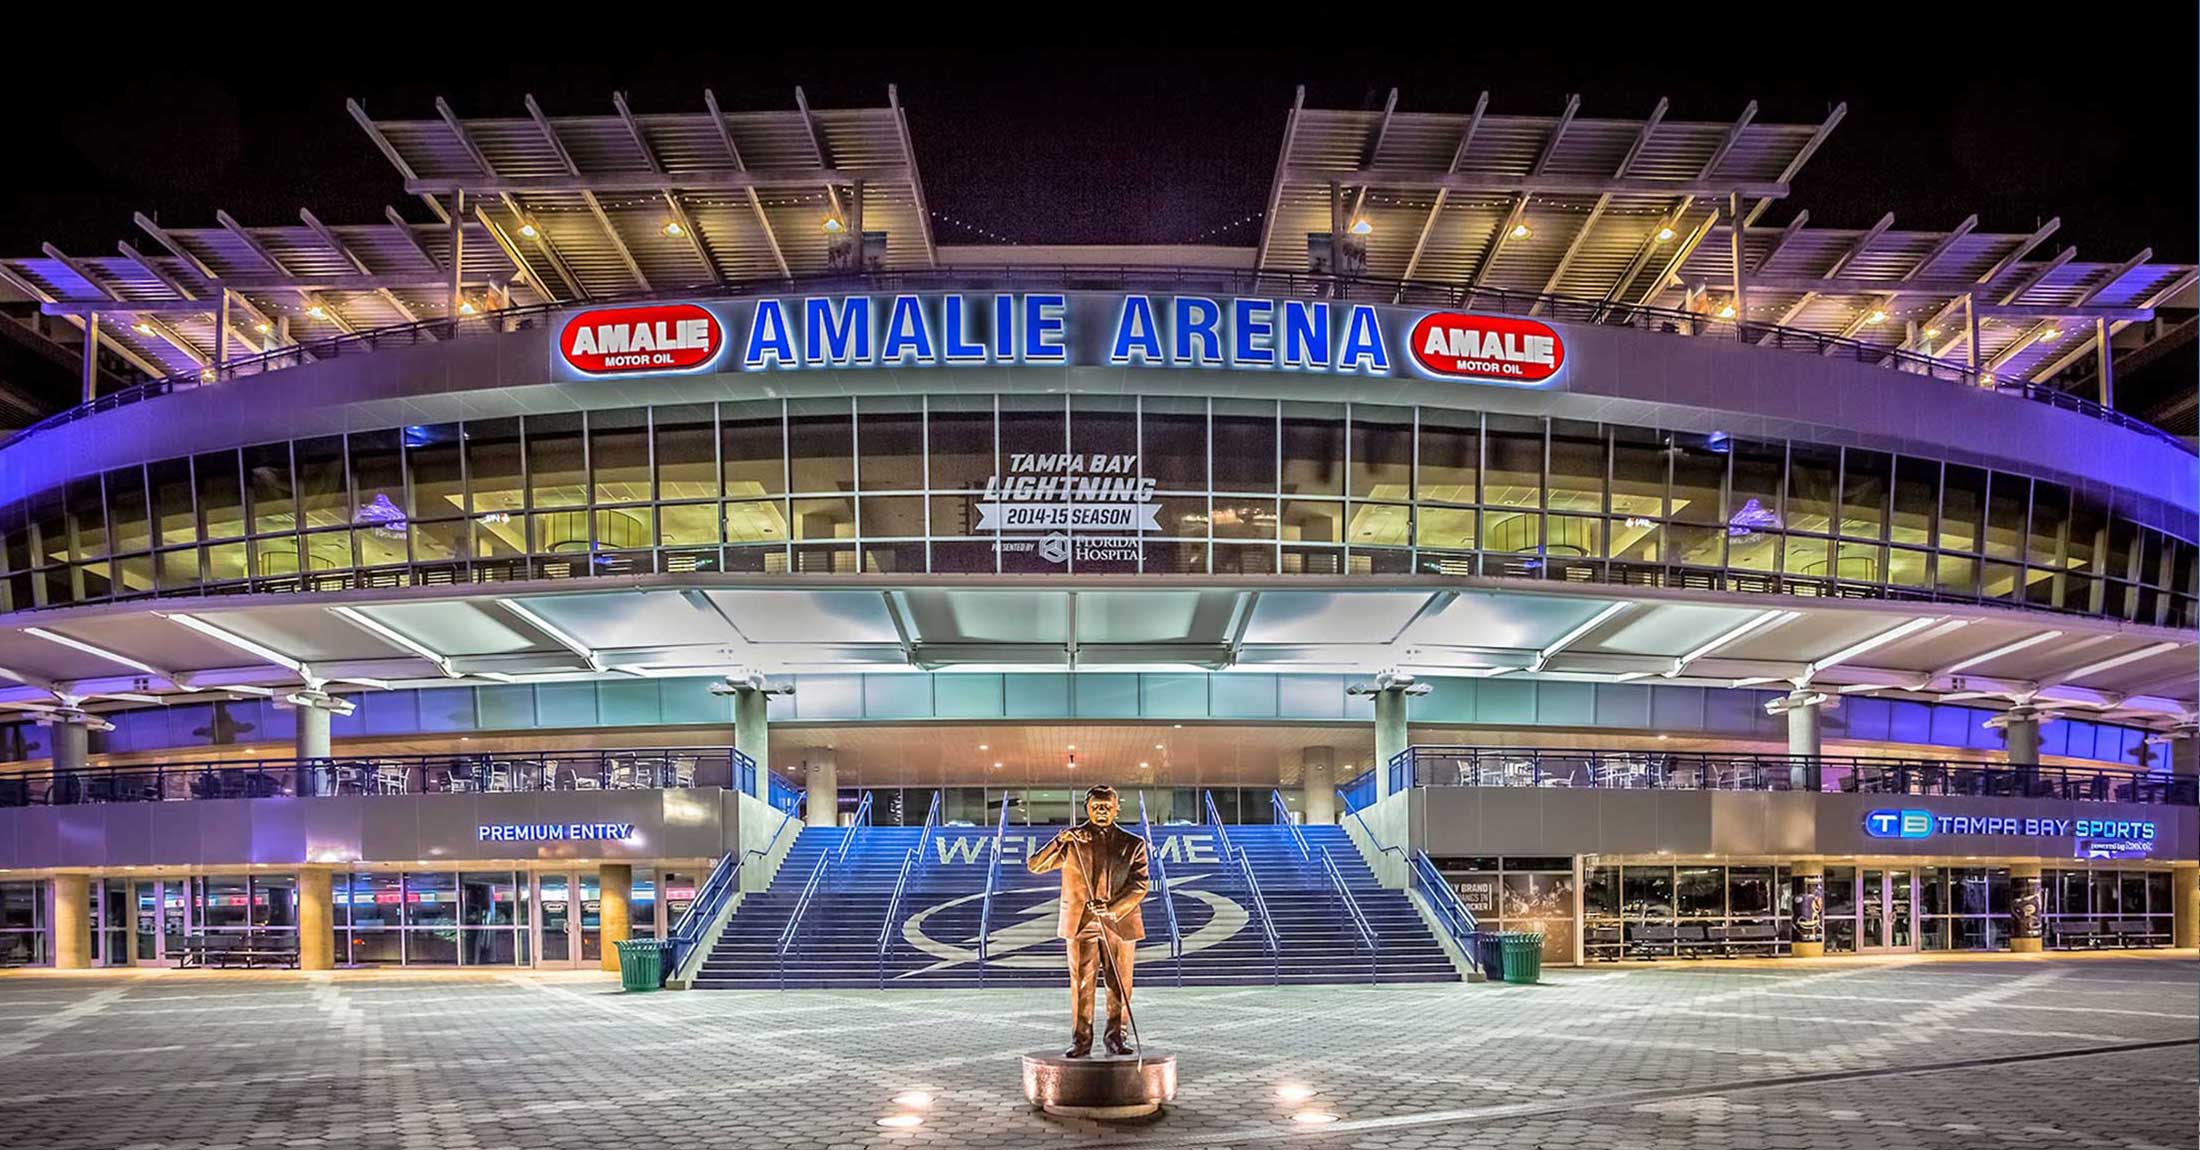 main entrance of amalie arena at night